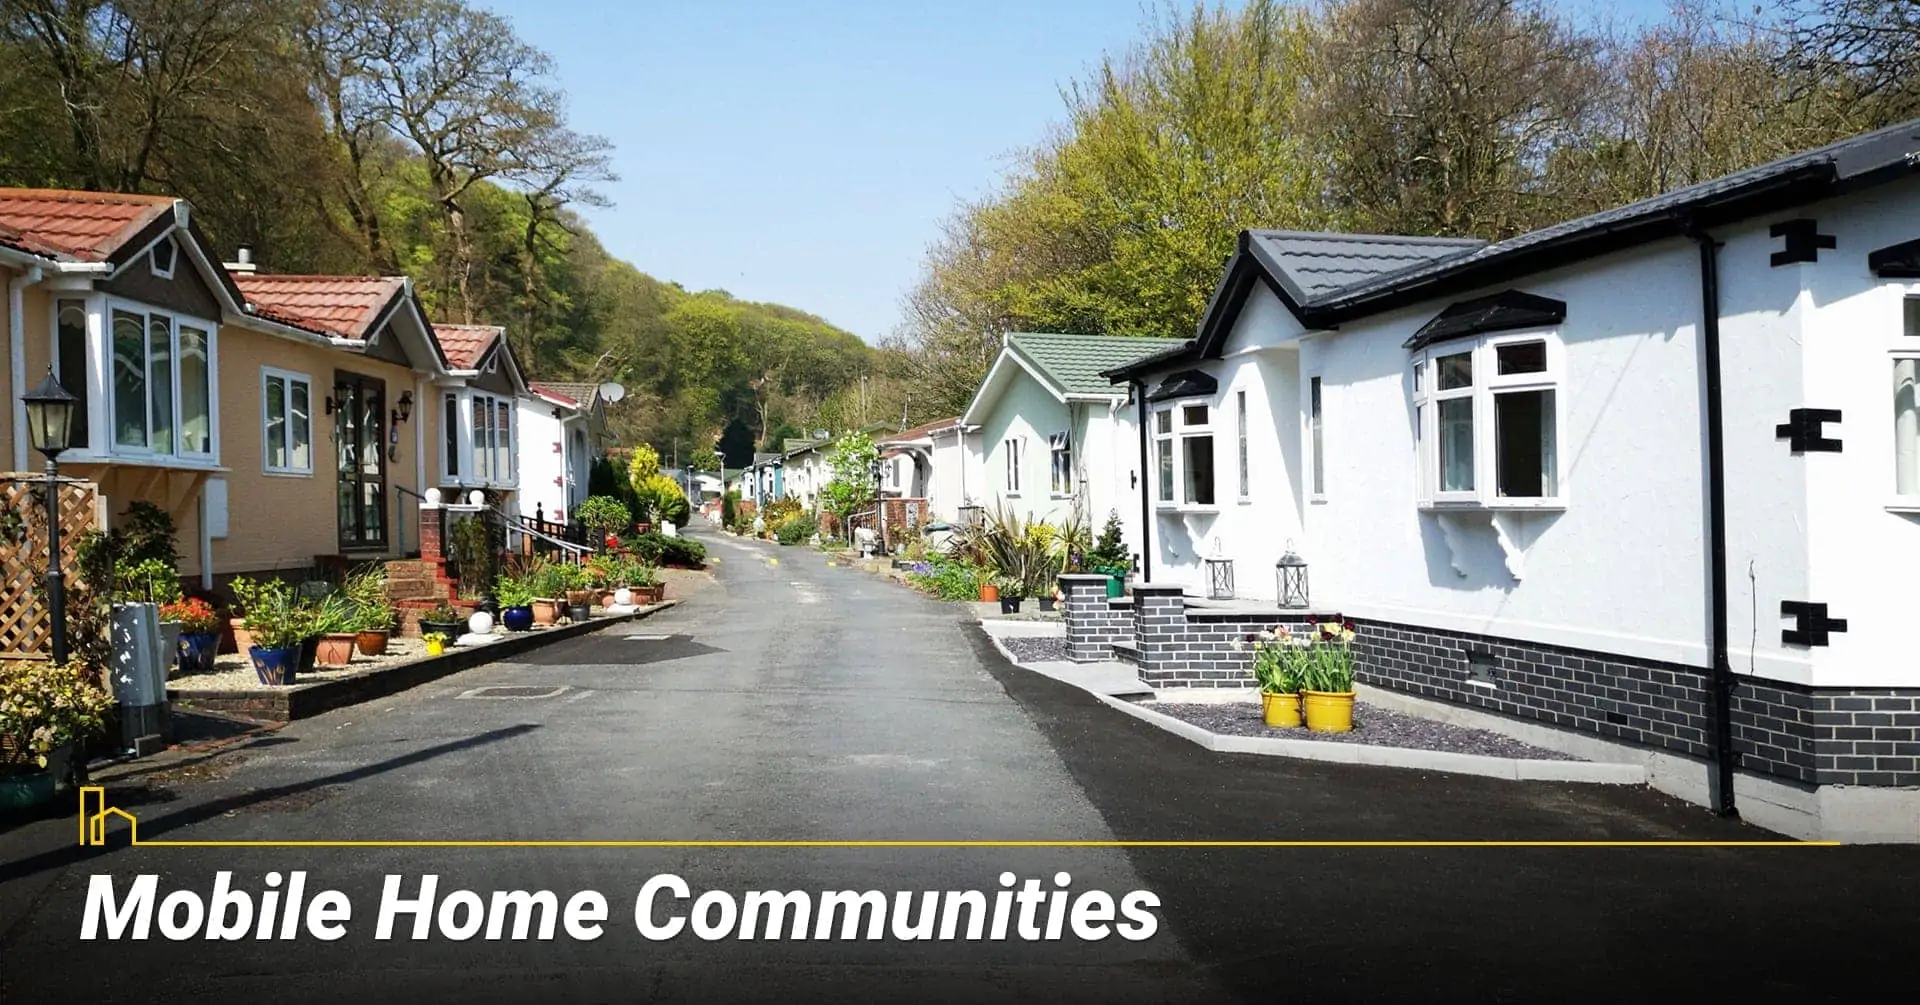 Mobile Home Communities, a sense of community